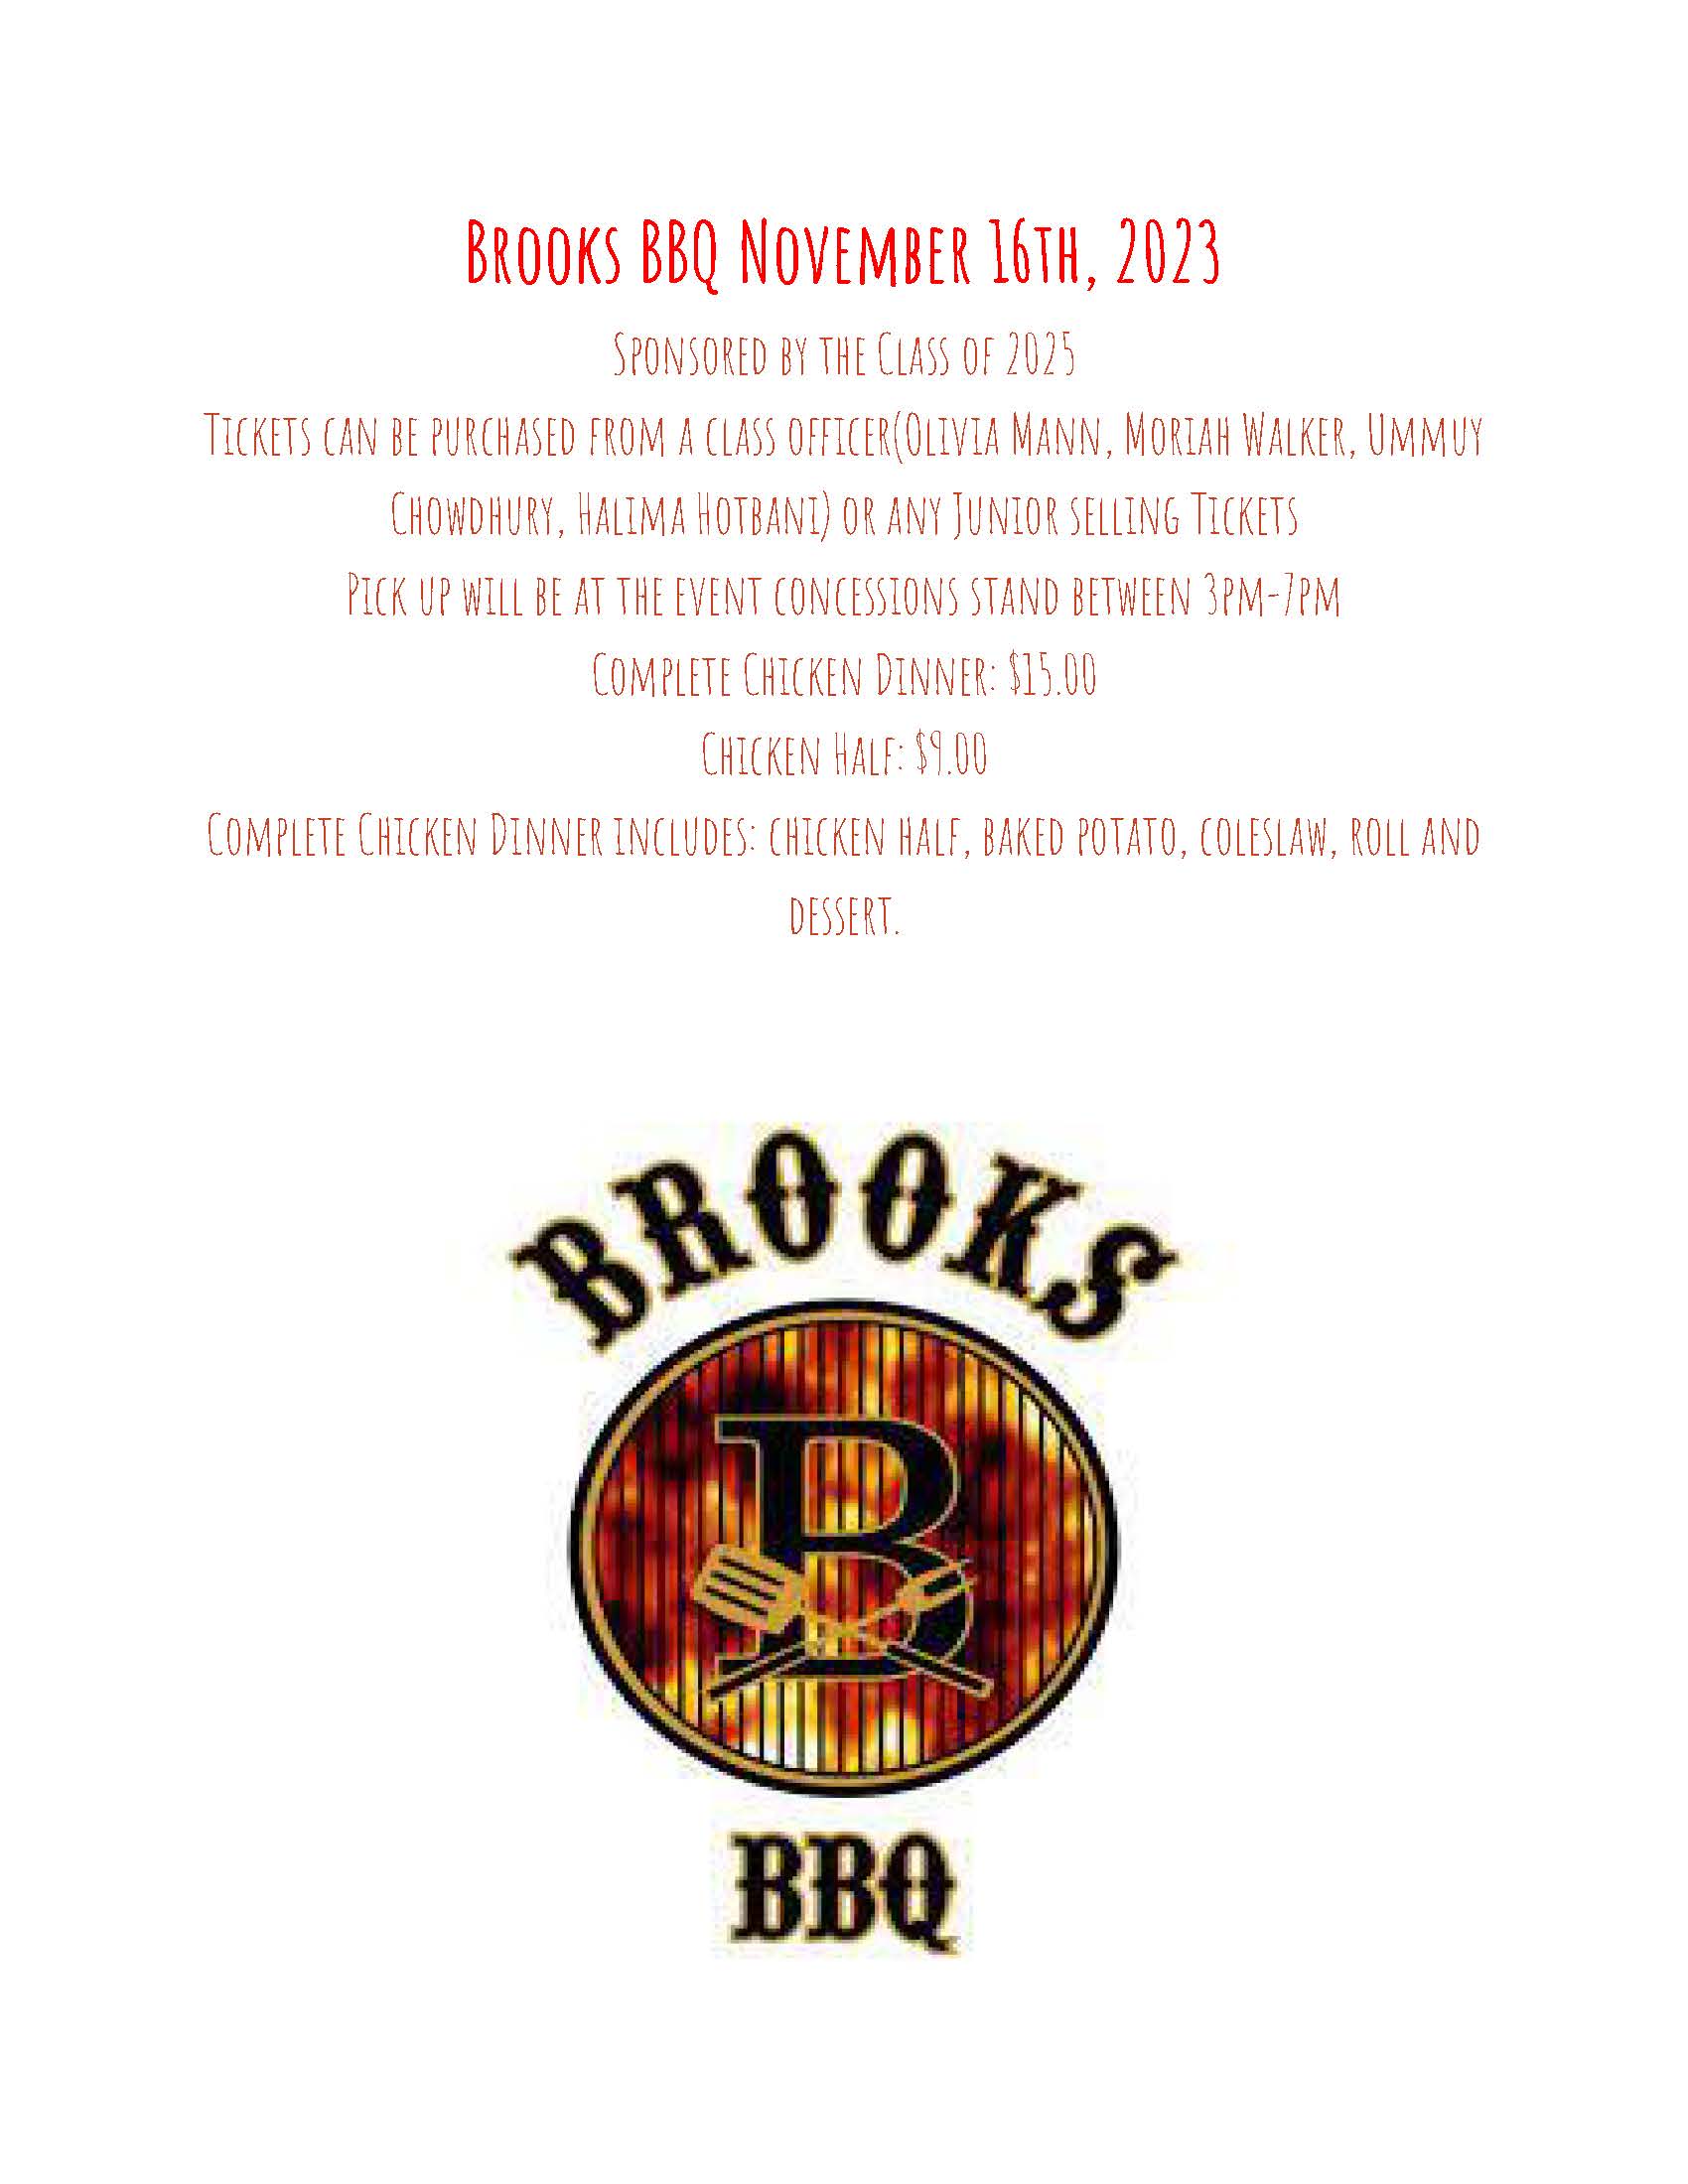 Brooks BBQ Fundraiser for Class of 2025 11/16 Hudson City School District